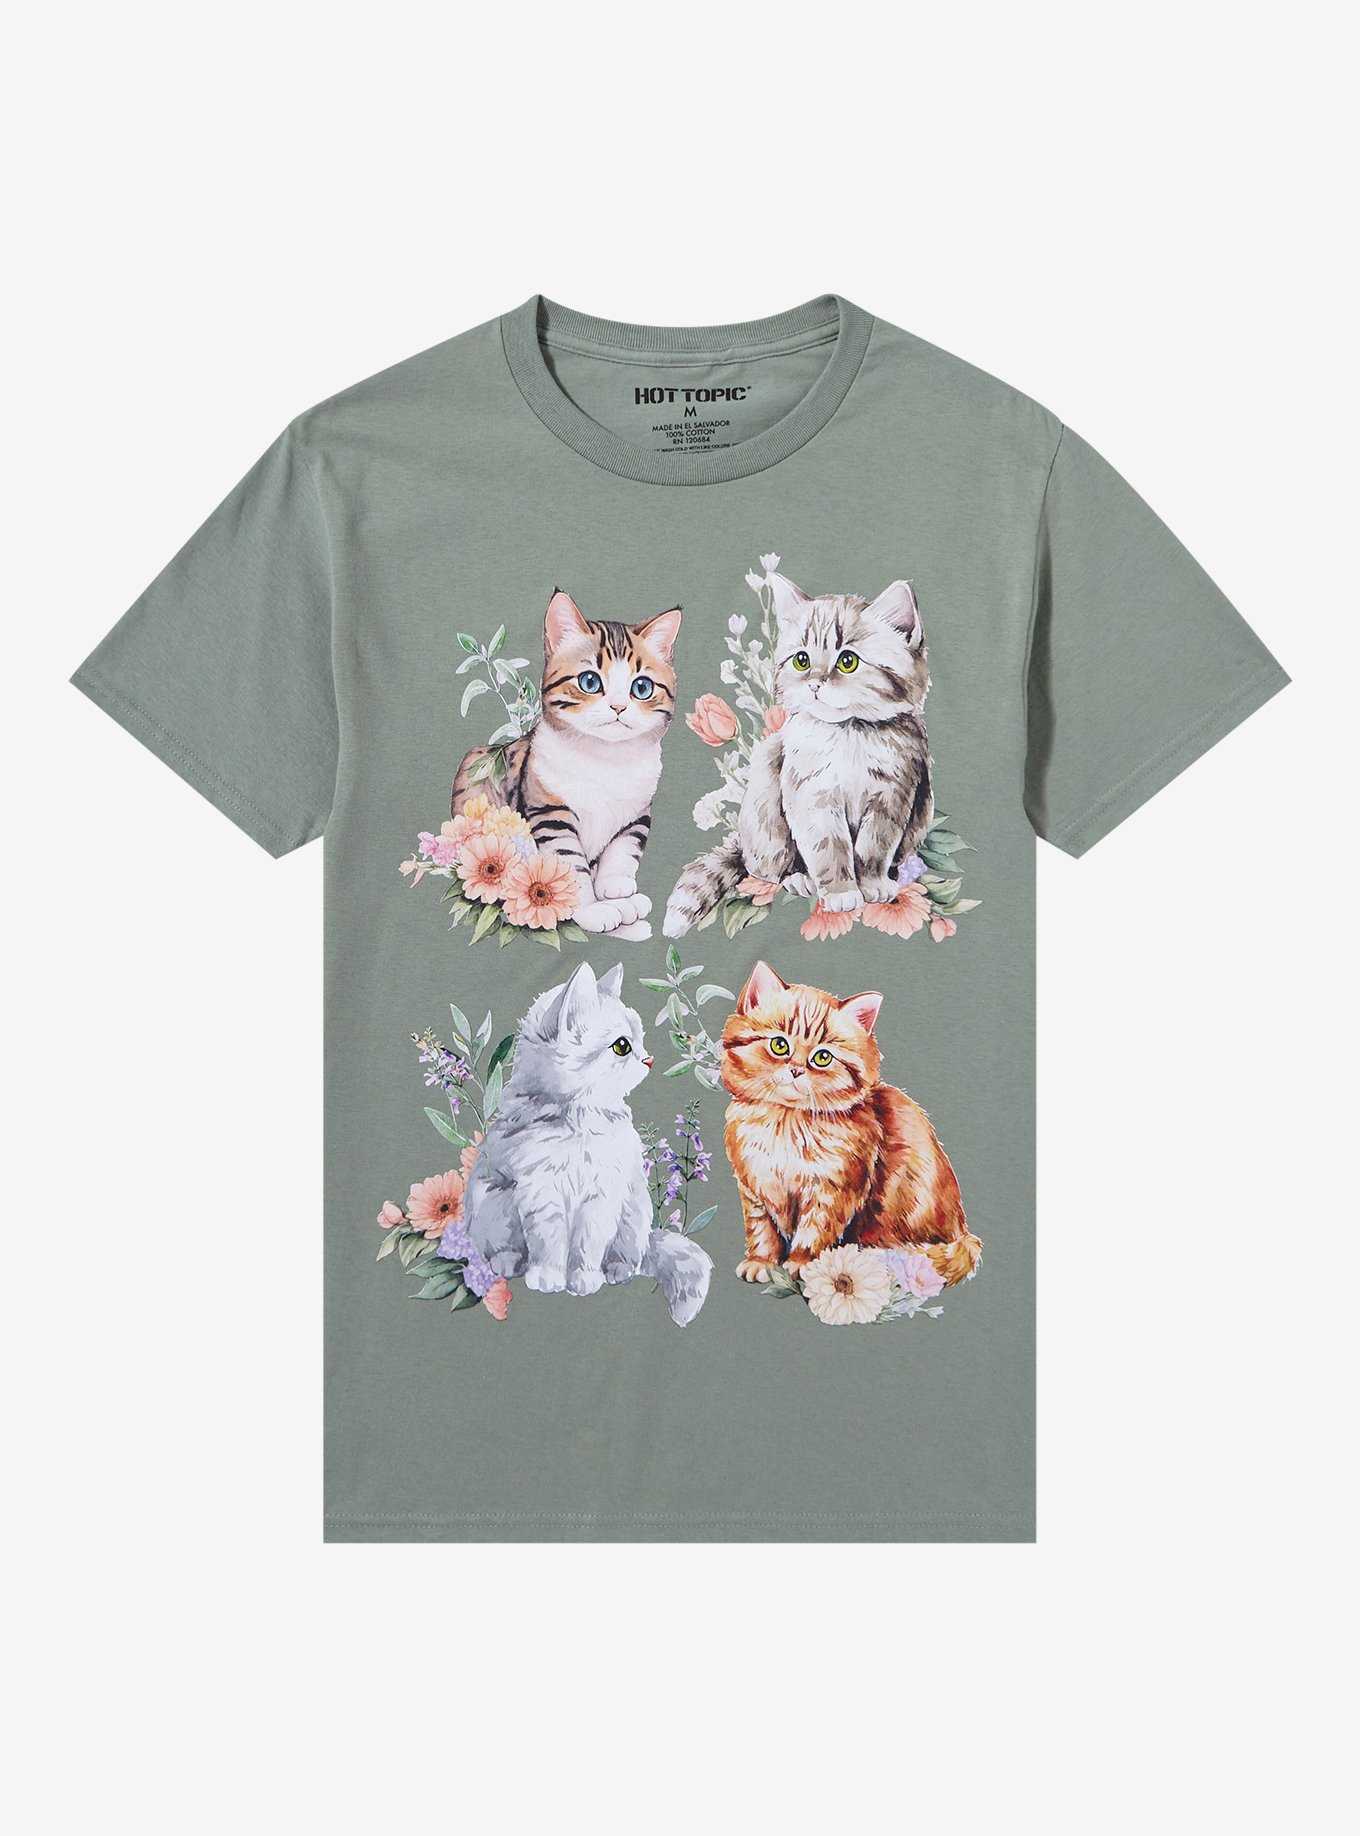 Kittens & Flowers Boyfriend Fit Girls T-Shirt, , hi-res